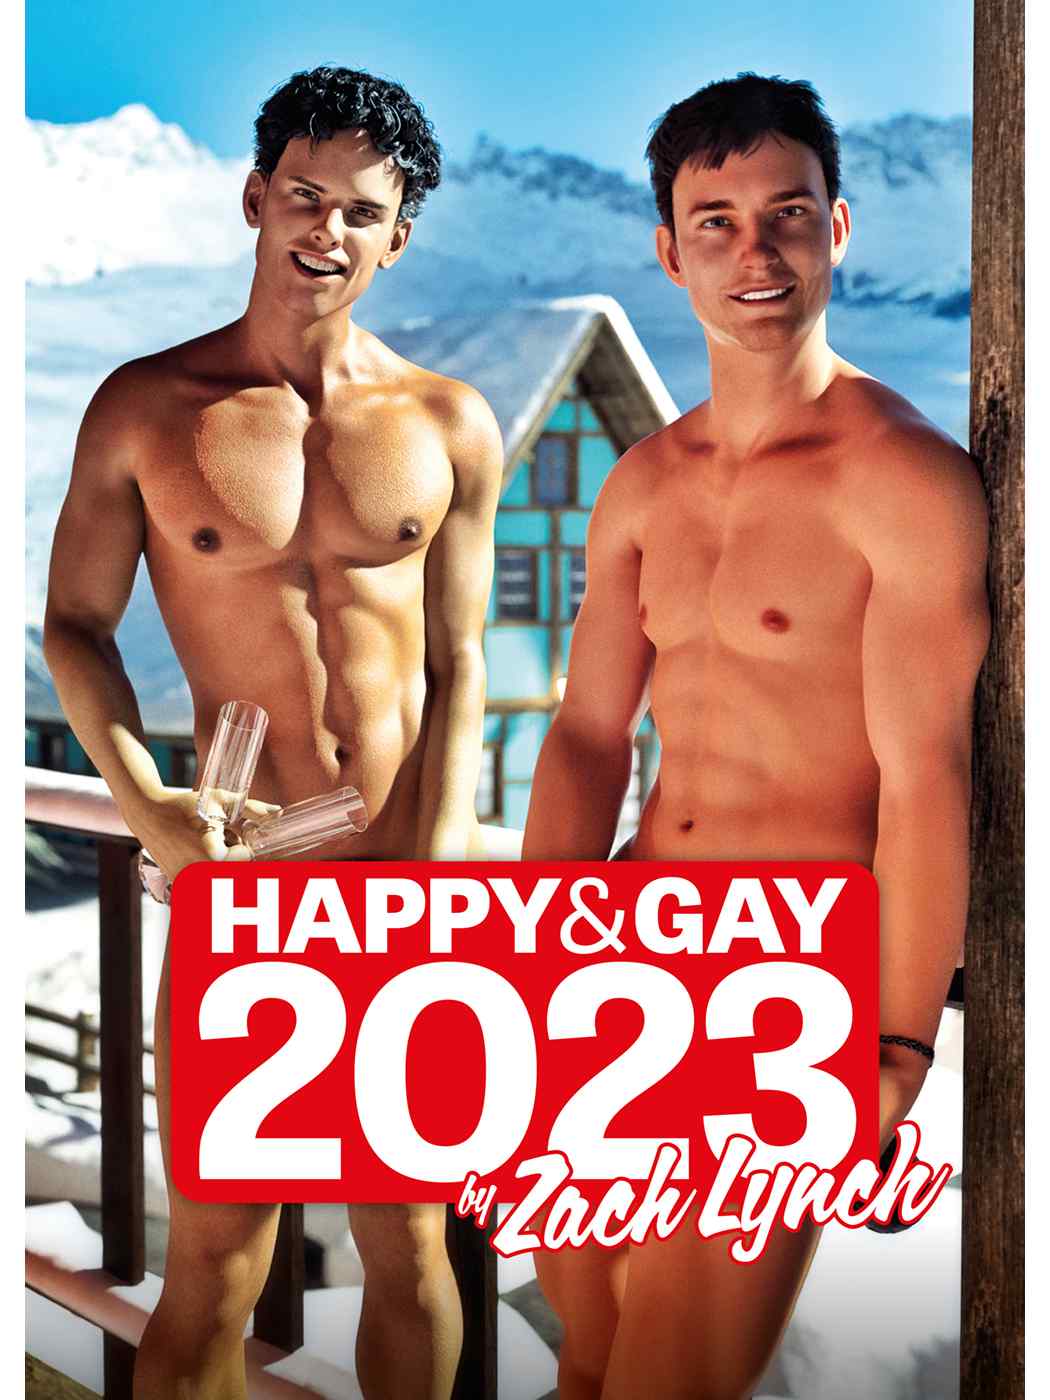 Happy & Gay by Zach Lynch | Kalender 2023         